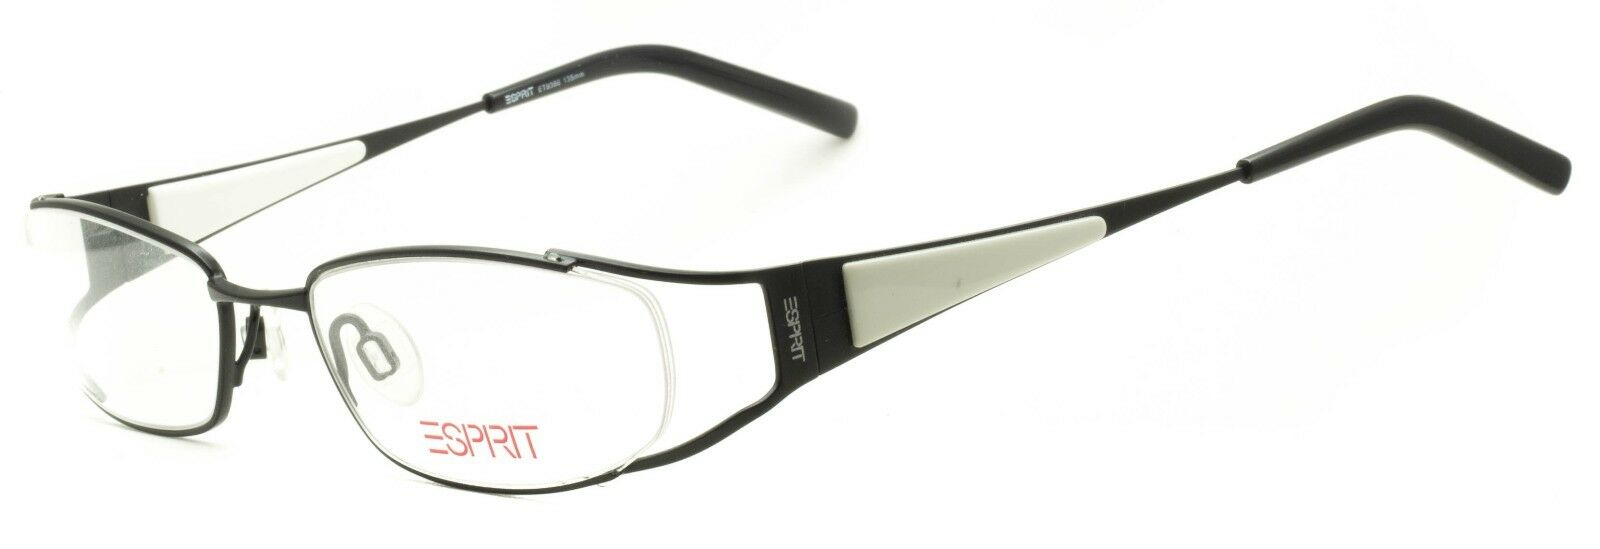 ESPRIT ET 9386 col. 538 Eyewear FRAMES NEW Glasses RX Optical Eyeglasses - BNIB